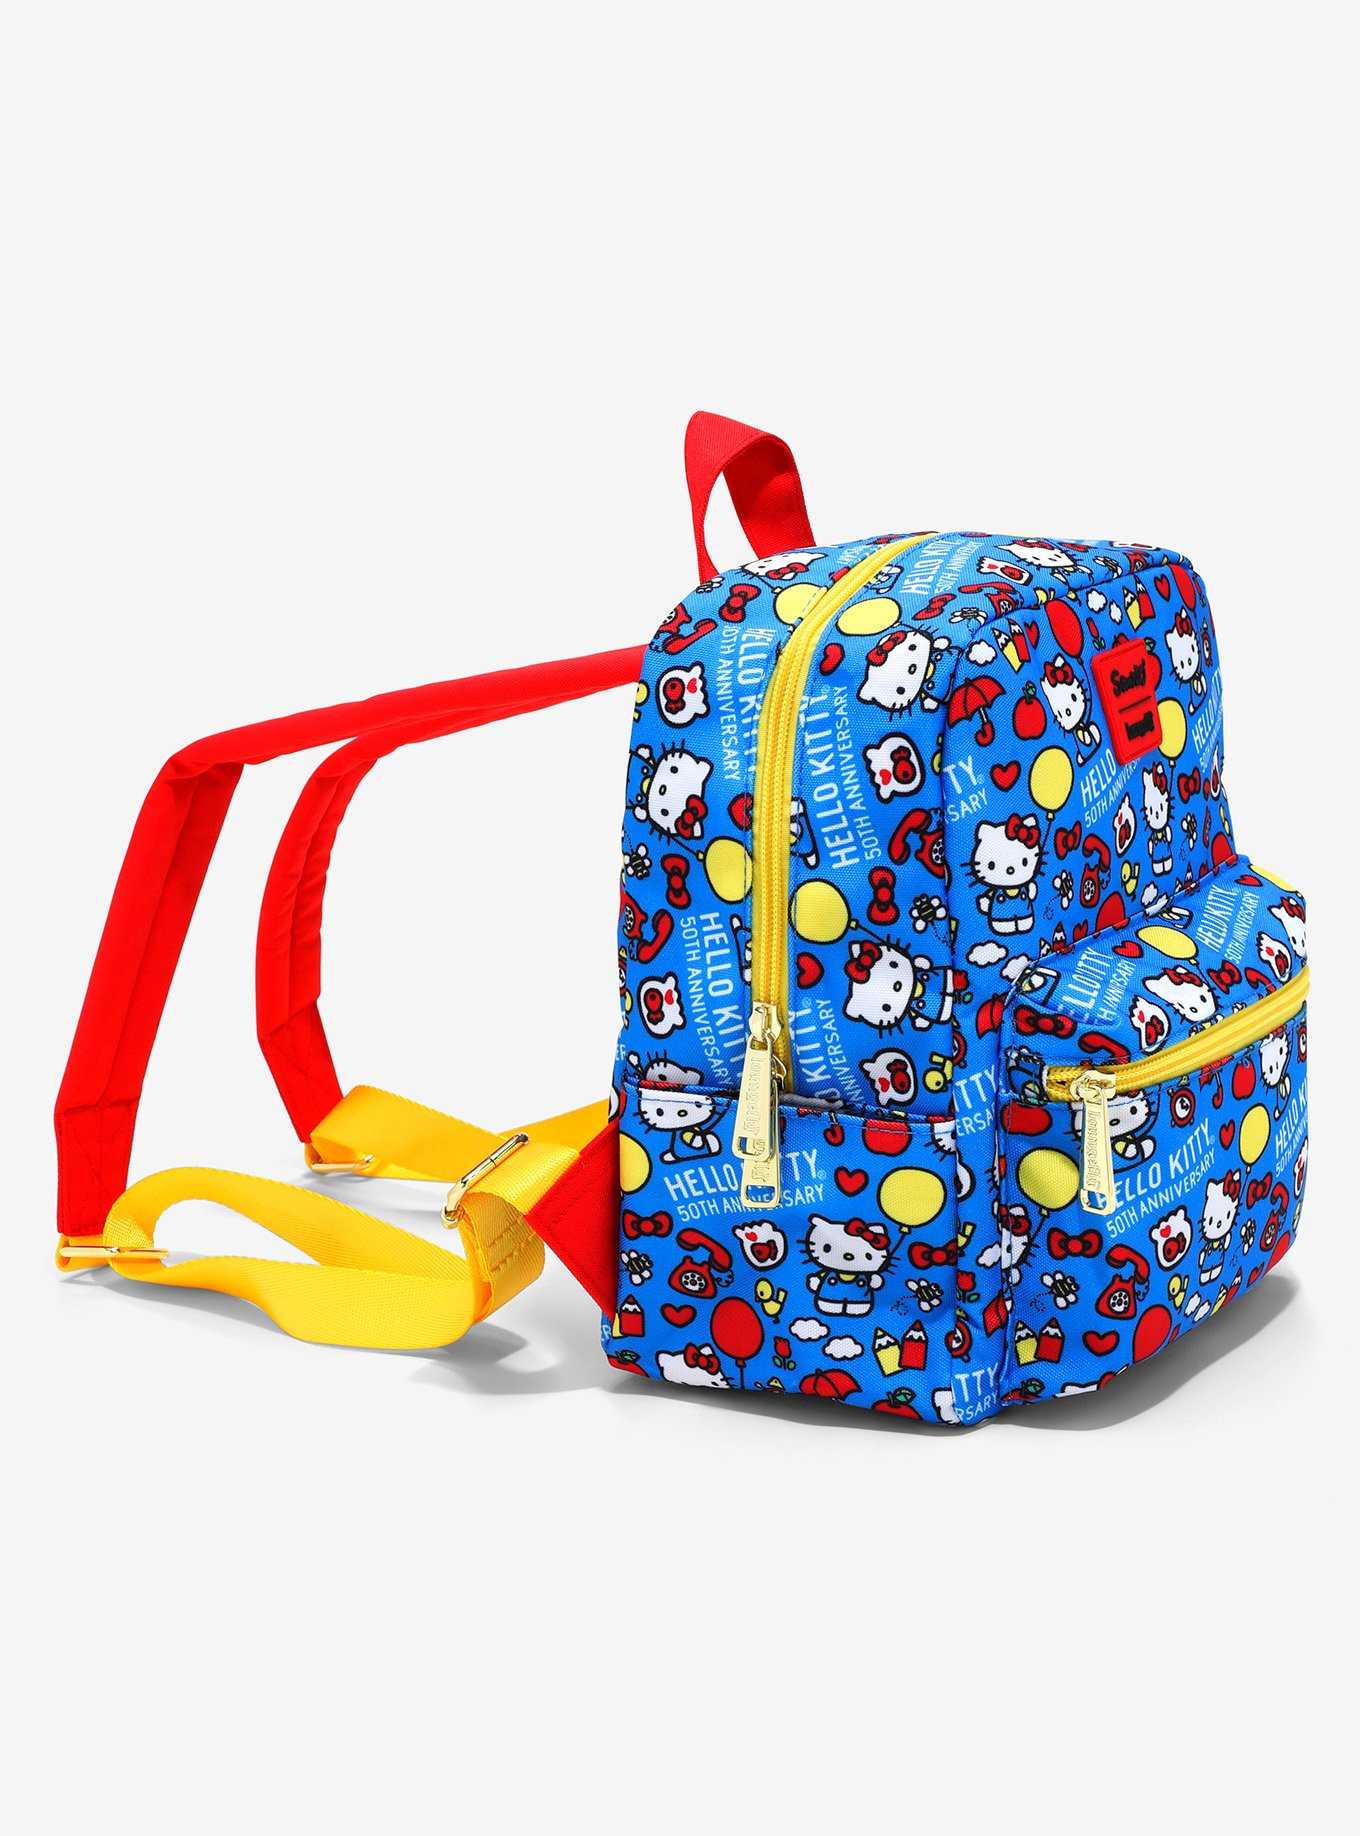 Loungefly Sanrio Hello Kitty 50th Anniversary Nylon Mini Backpack, , hi-res